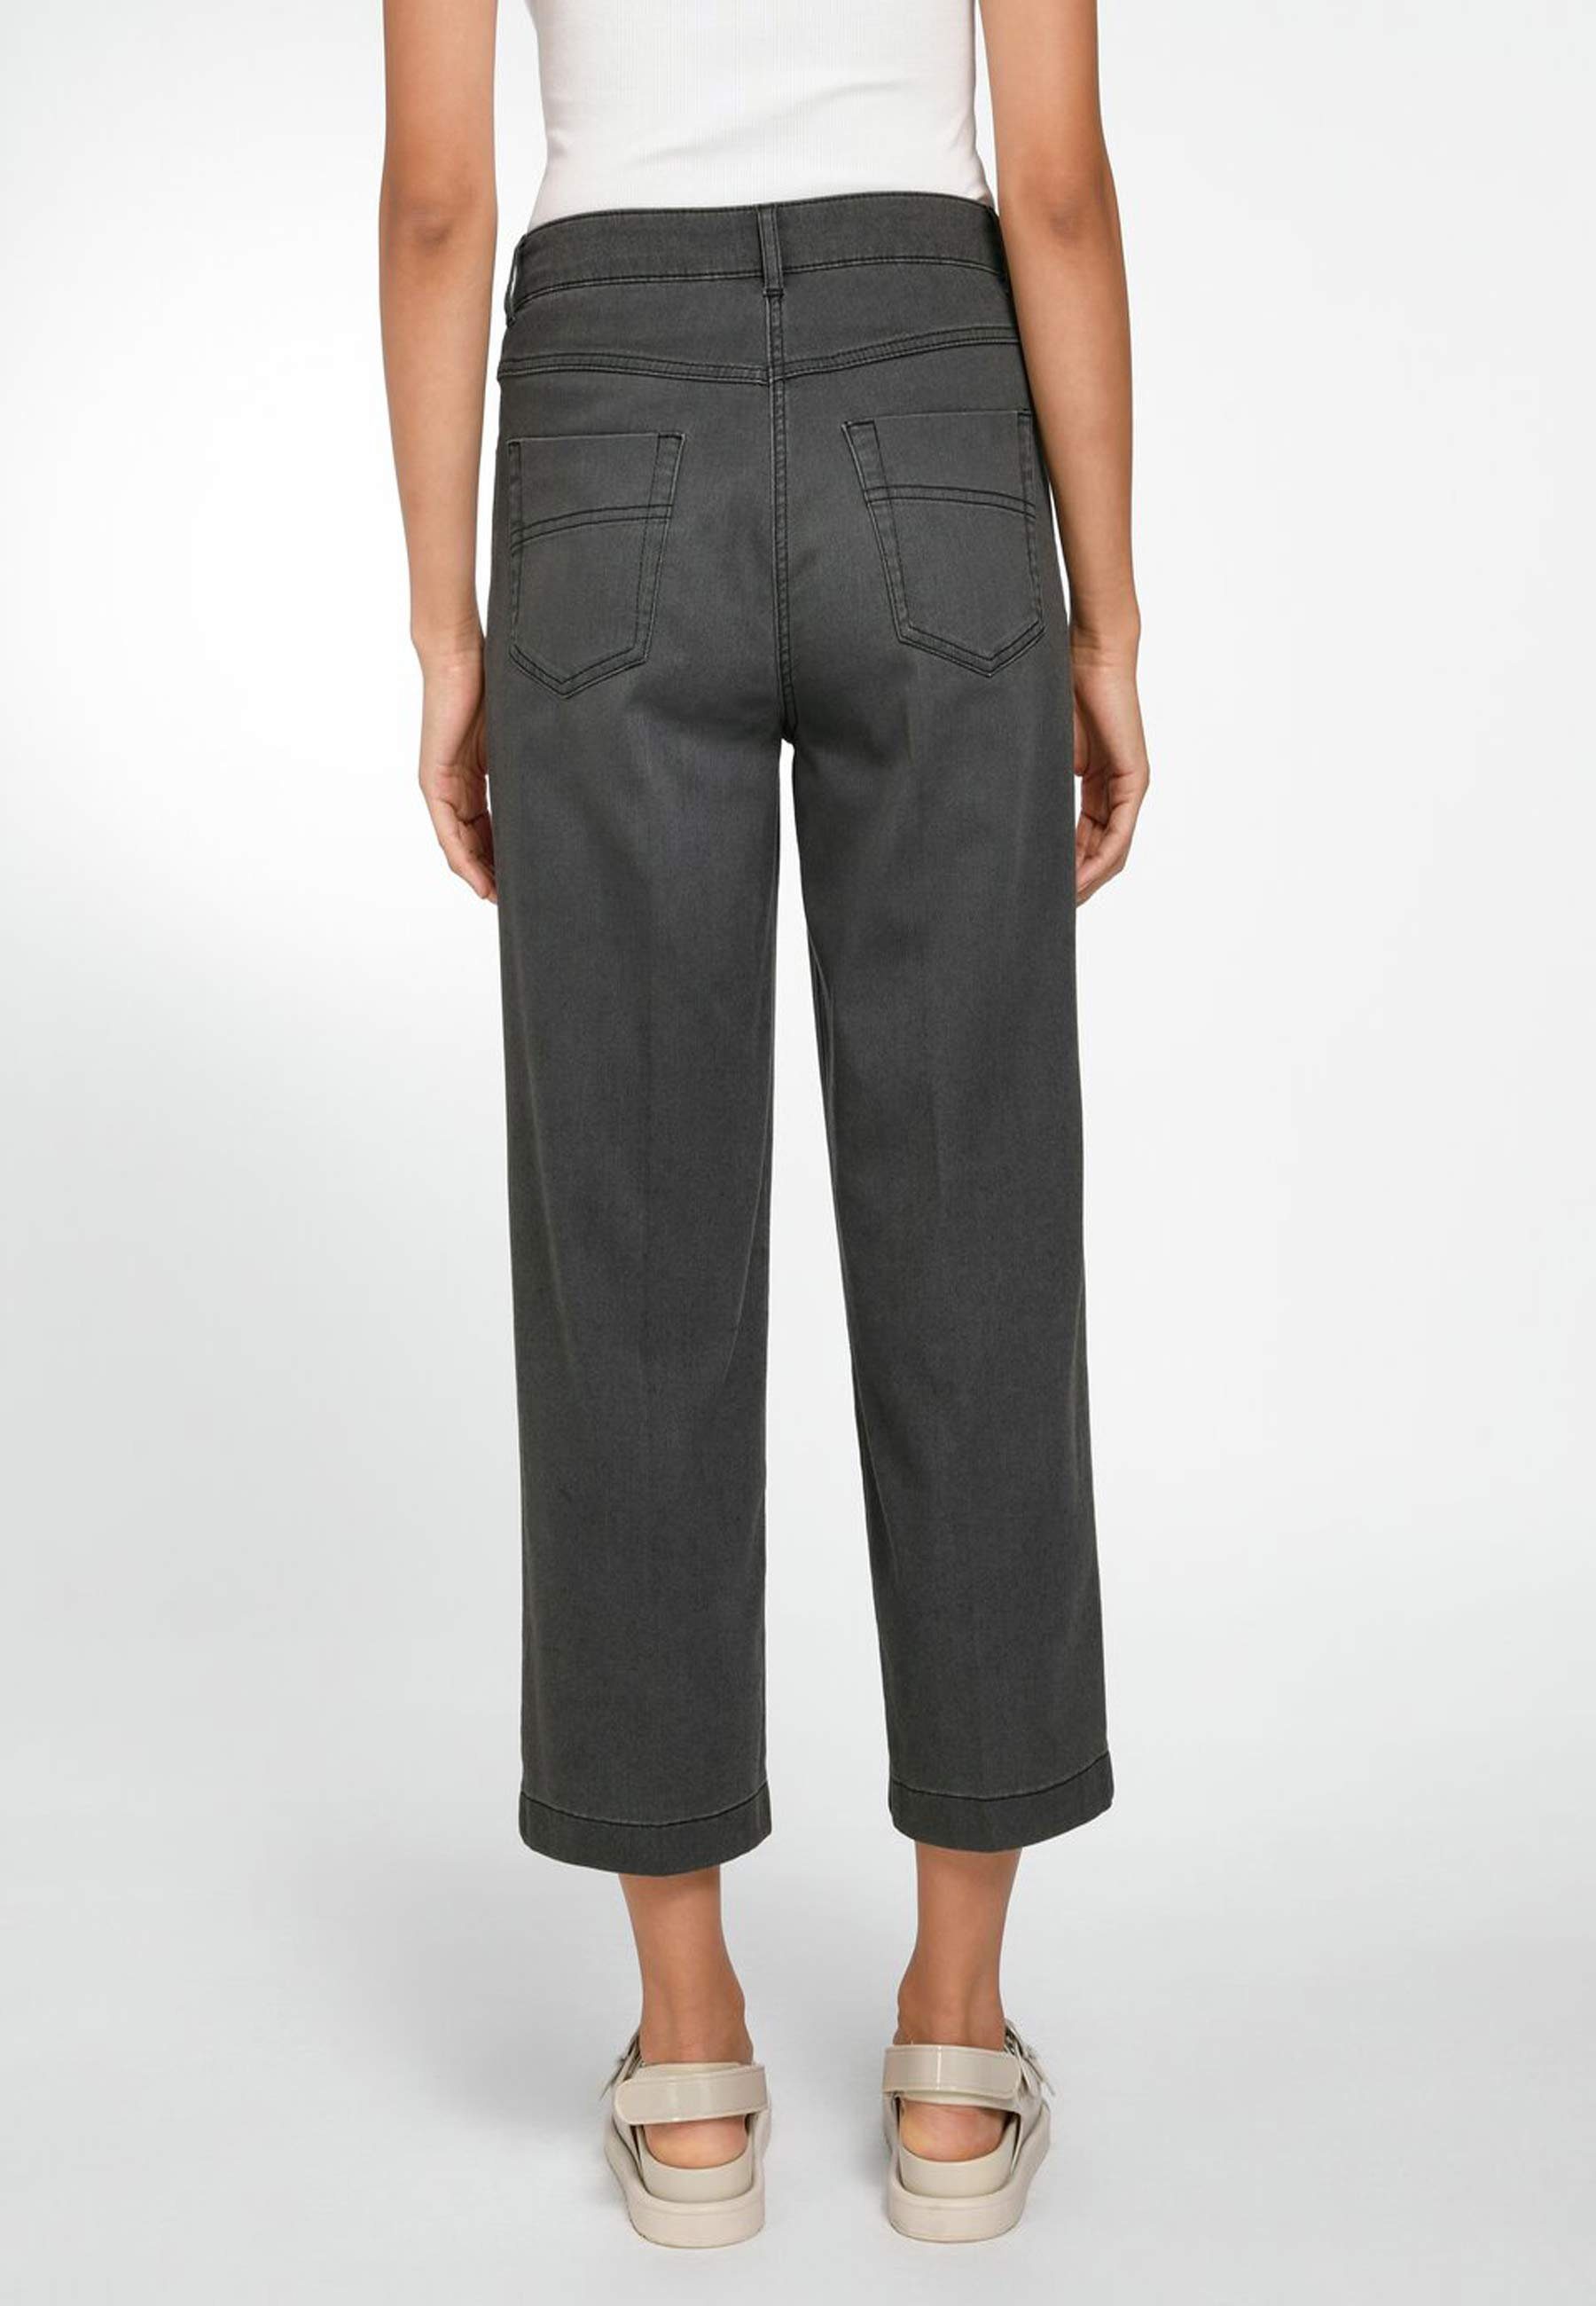 Cotton Basler klassischem mit hellgrau Design 5-Pocket-Jeans